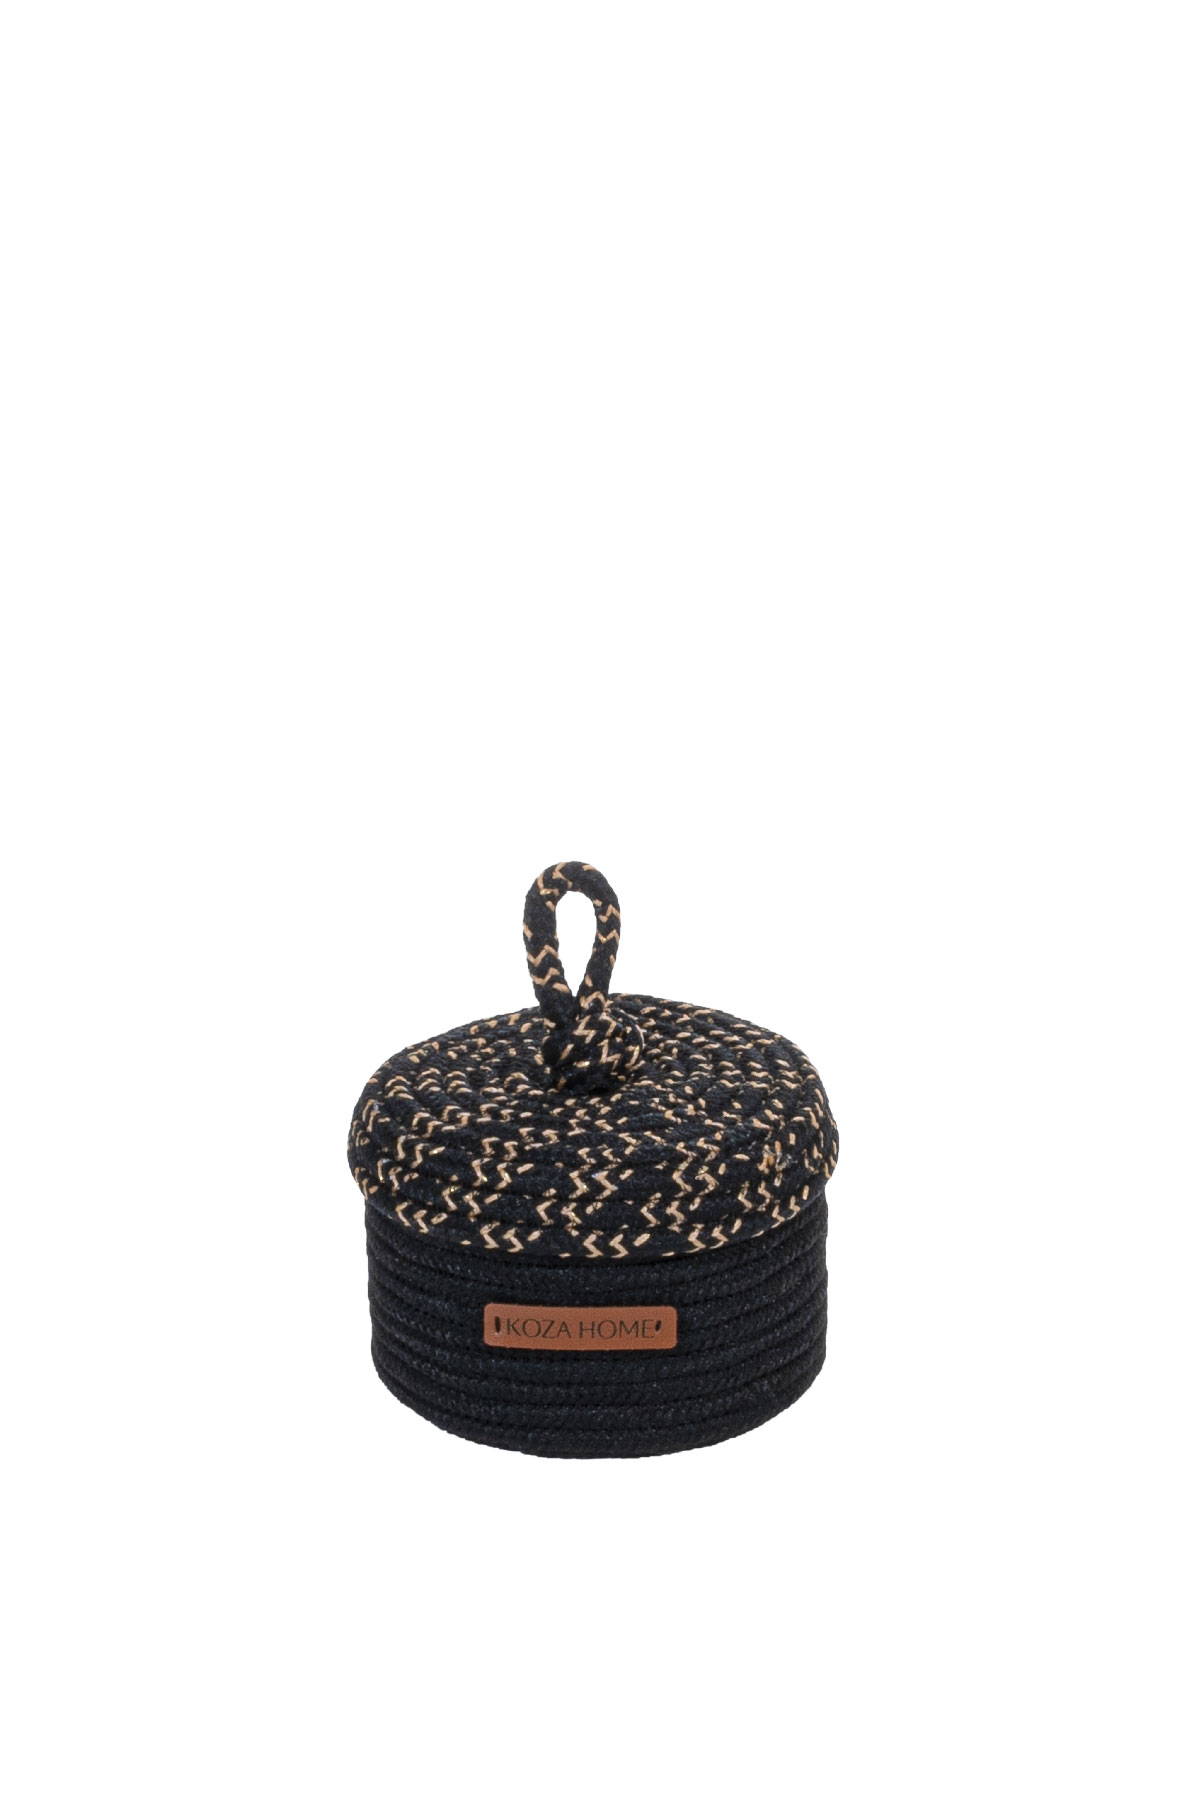 Cesta Handmade Cotton Black Wicker Decorative Basket With Lid 15cm